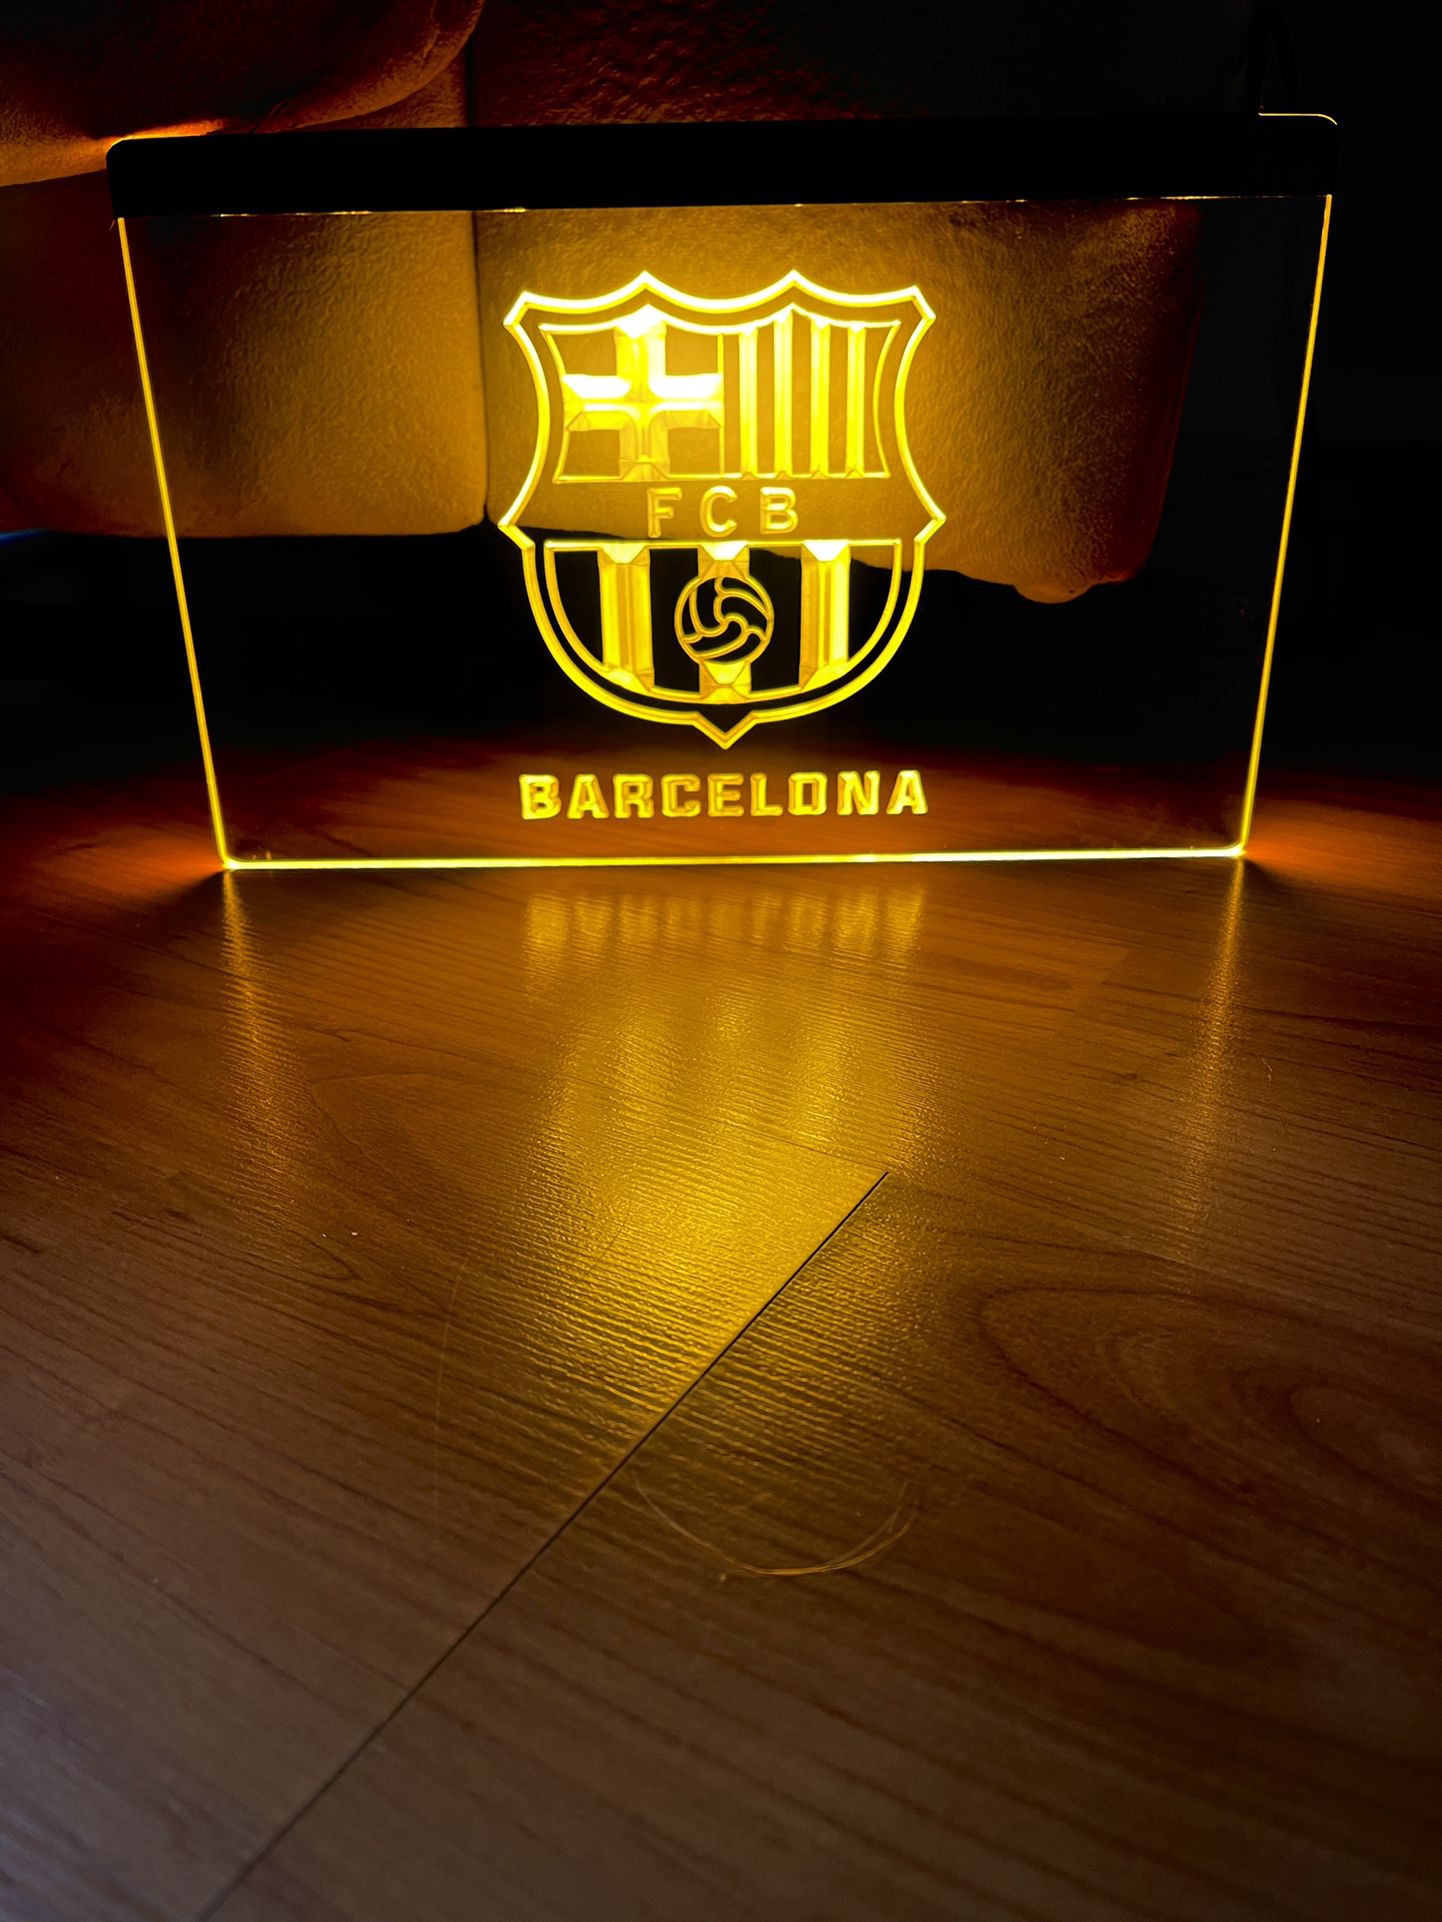 FCB BARCELONA LED NEON GOLD LIGHT SIGN 8x12